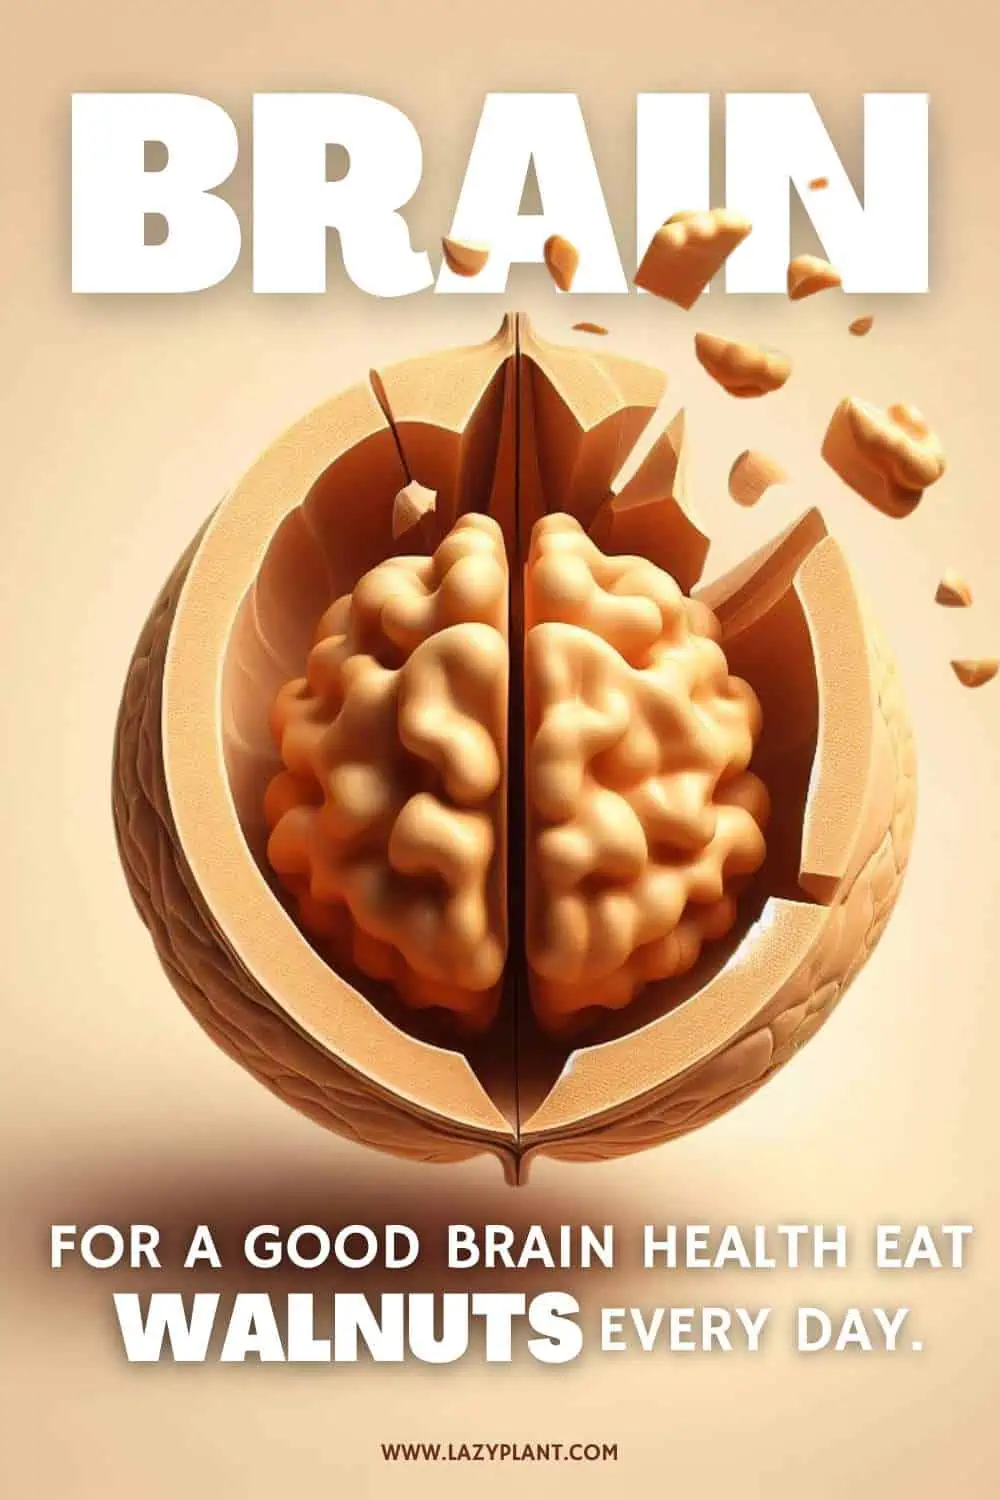 Walnuts support Brain Health